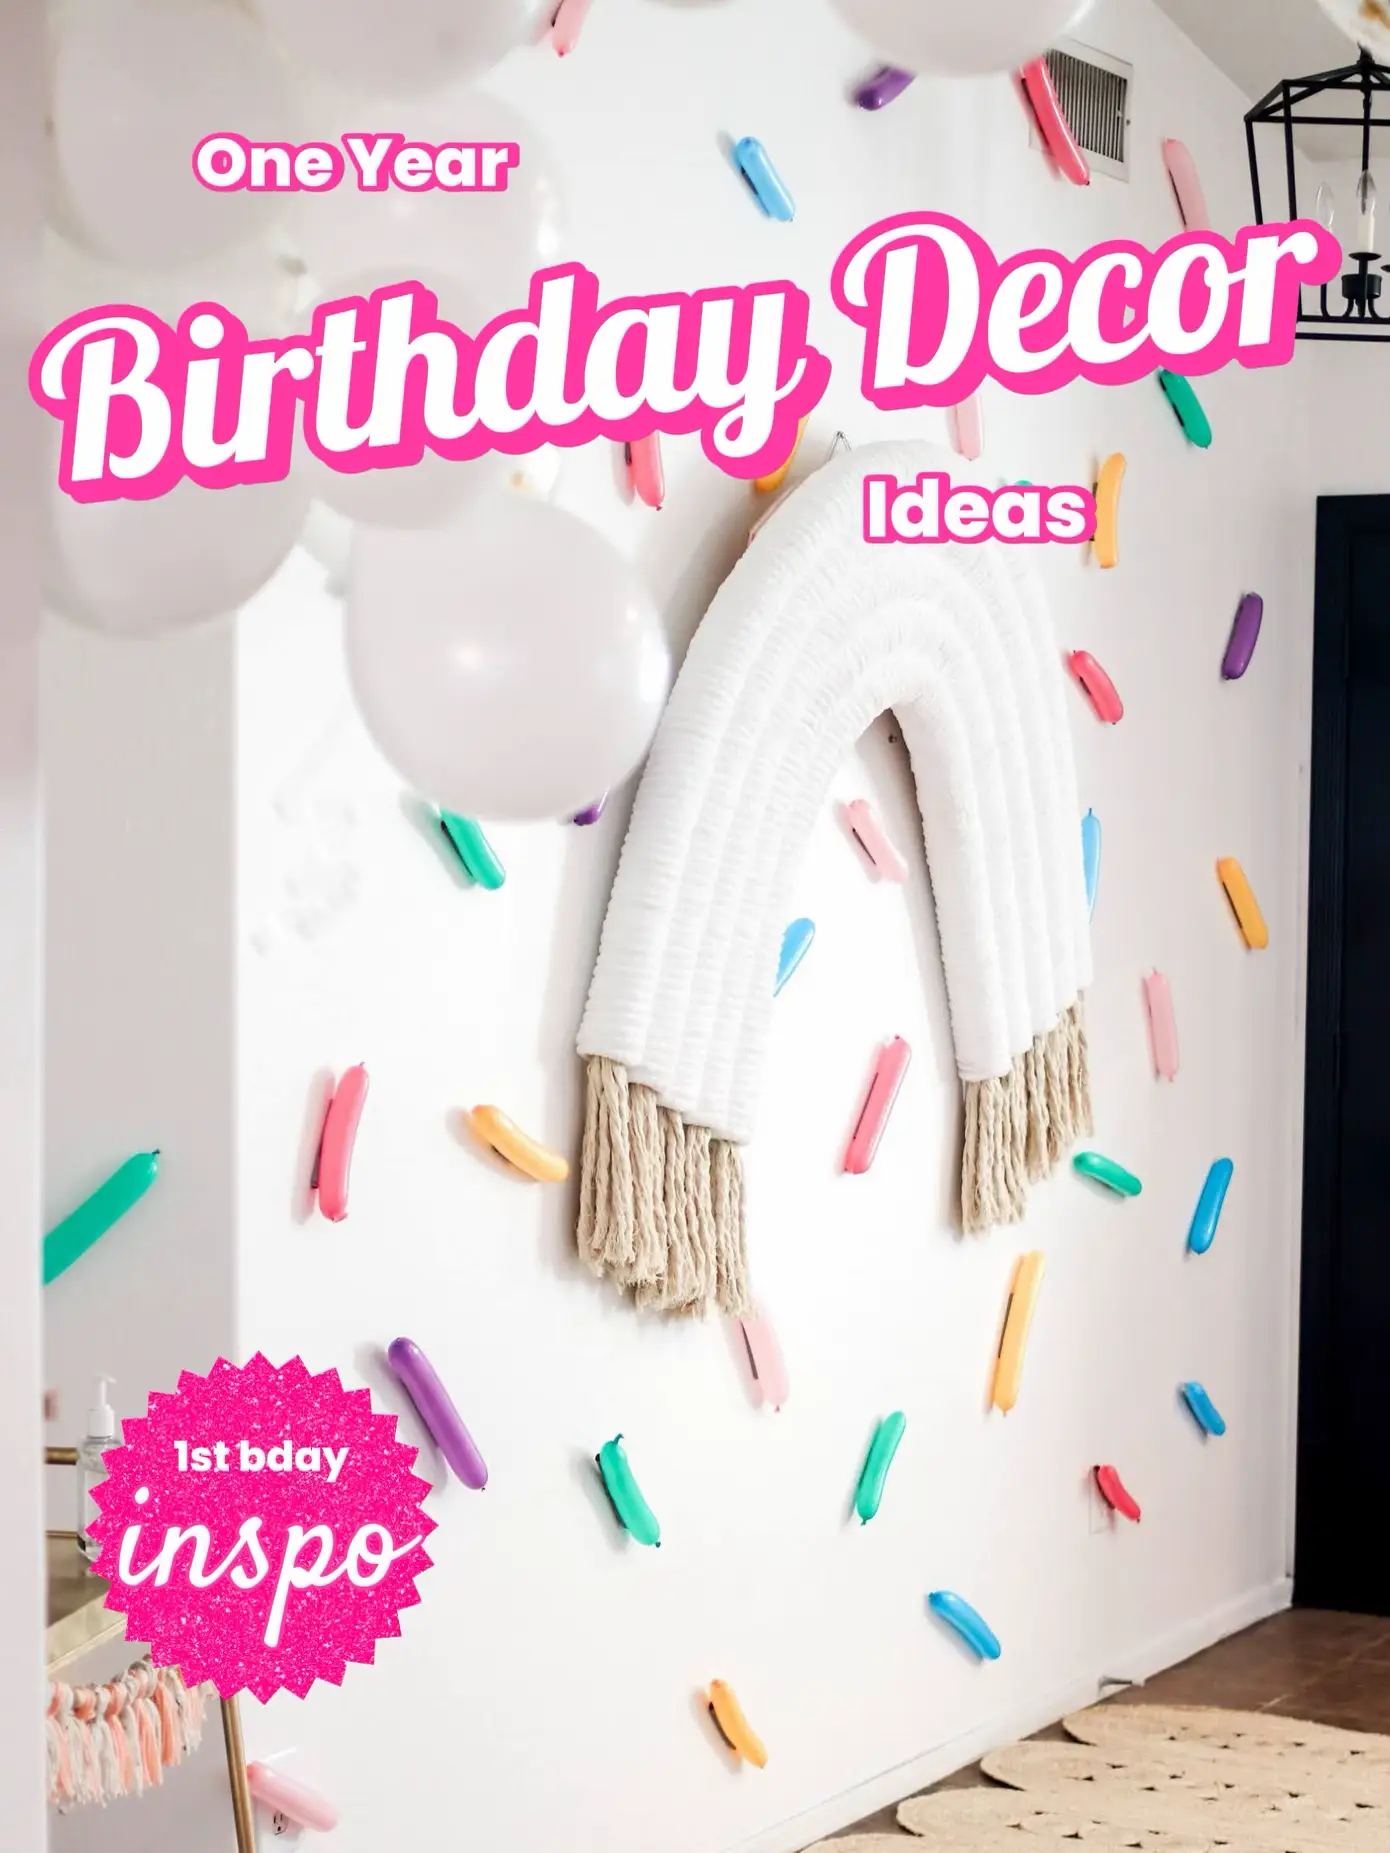 First Birthday Decor Ideas, Gallery posted by DIYJenna